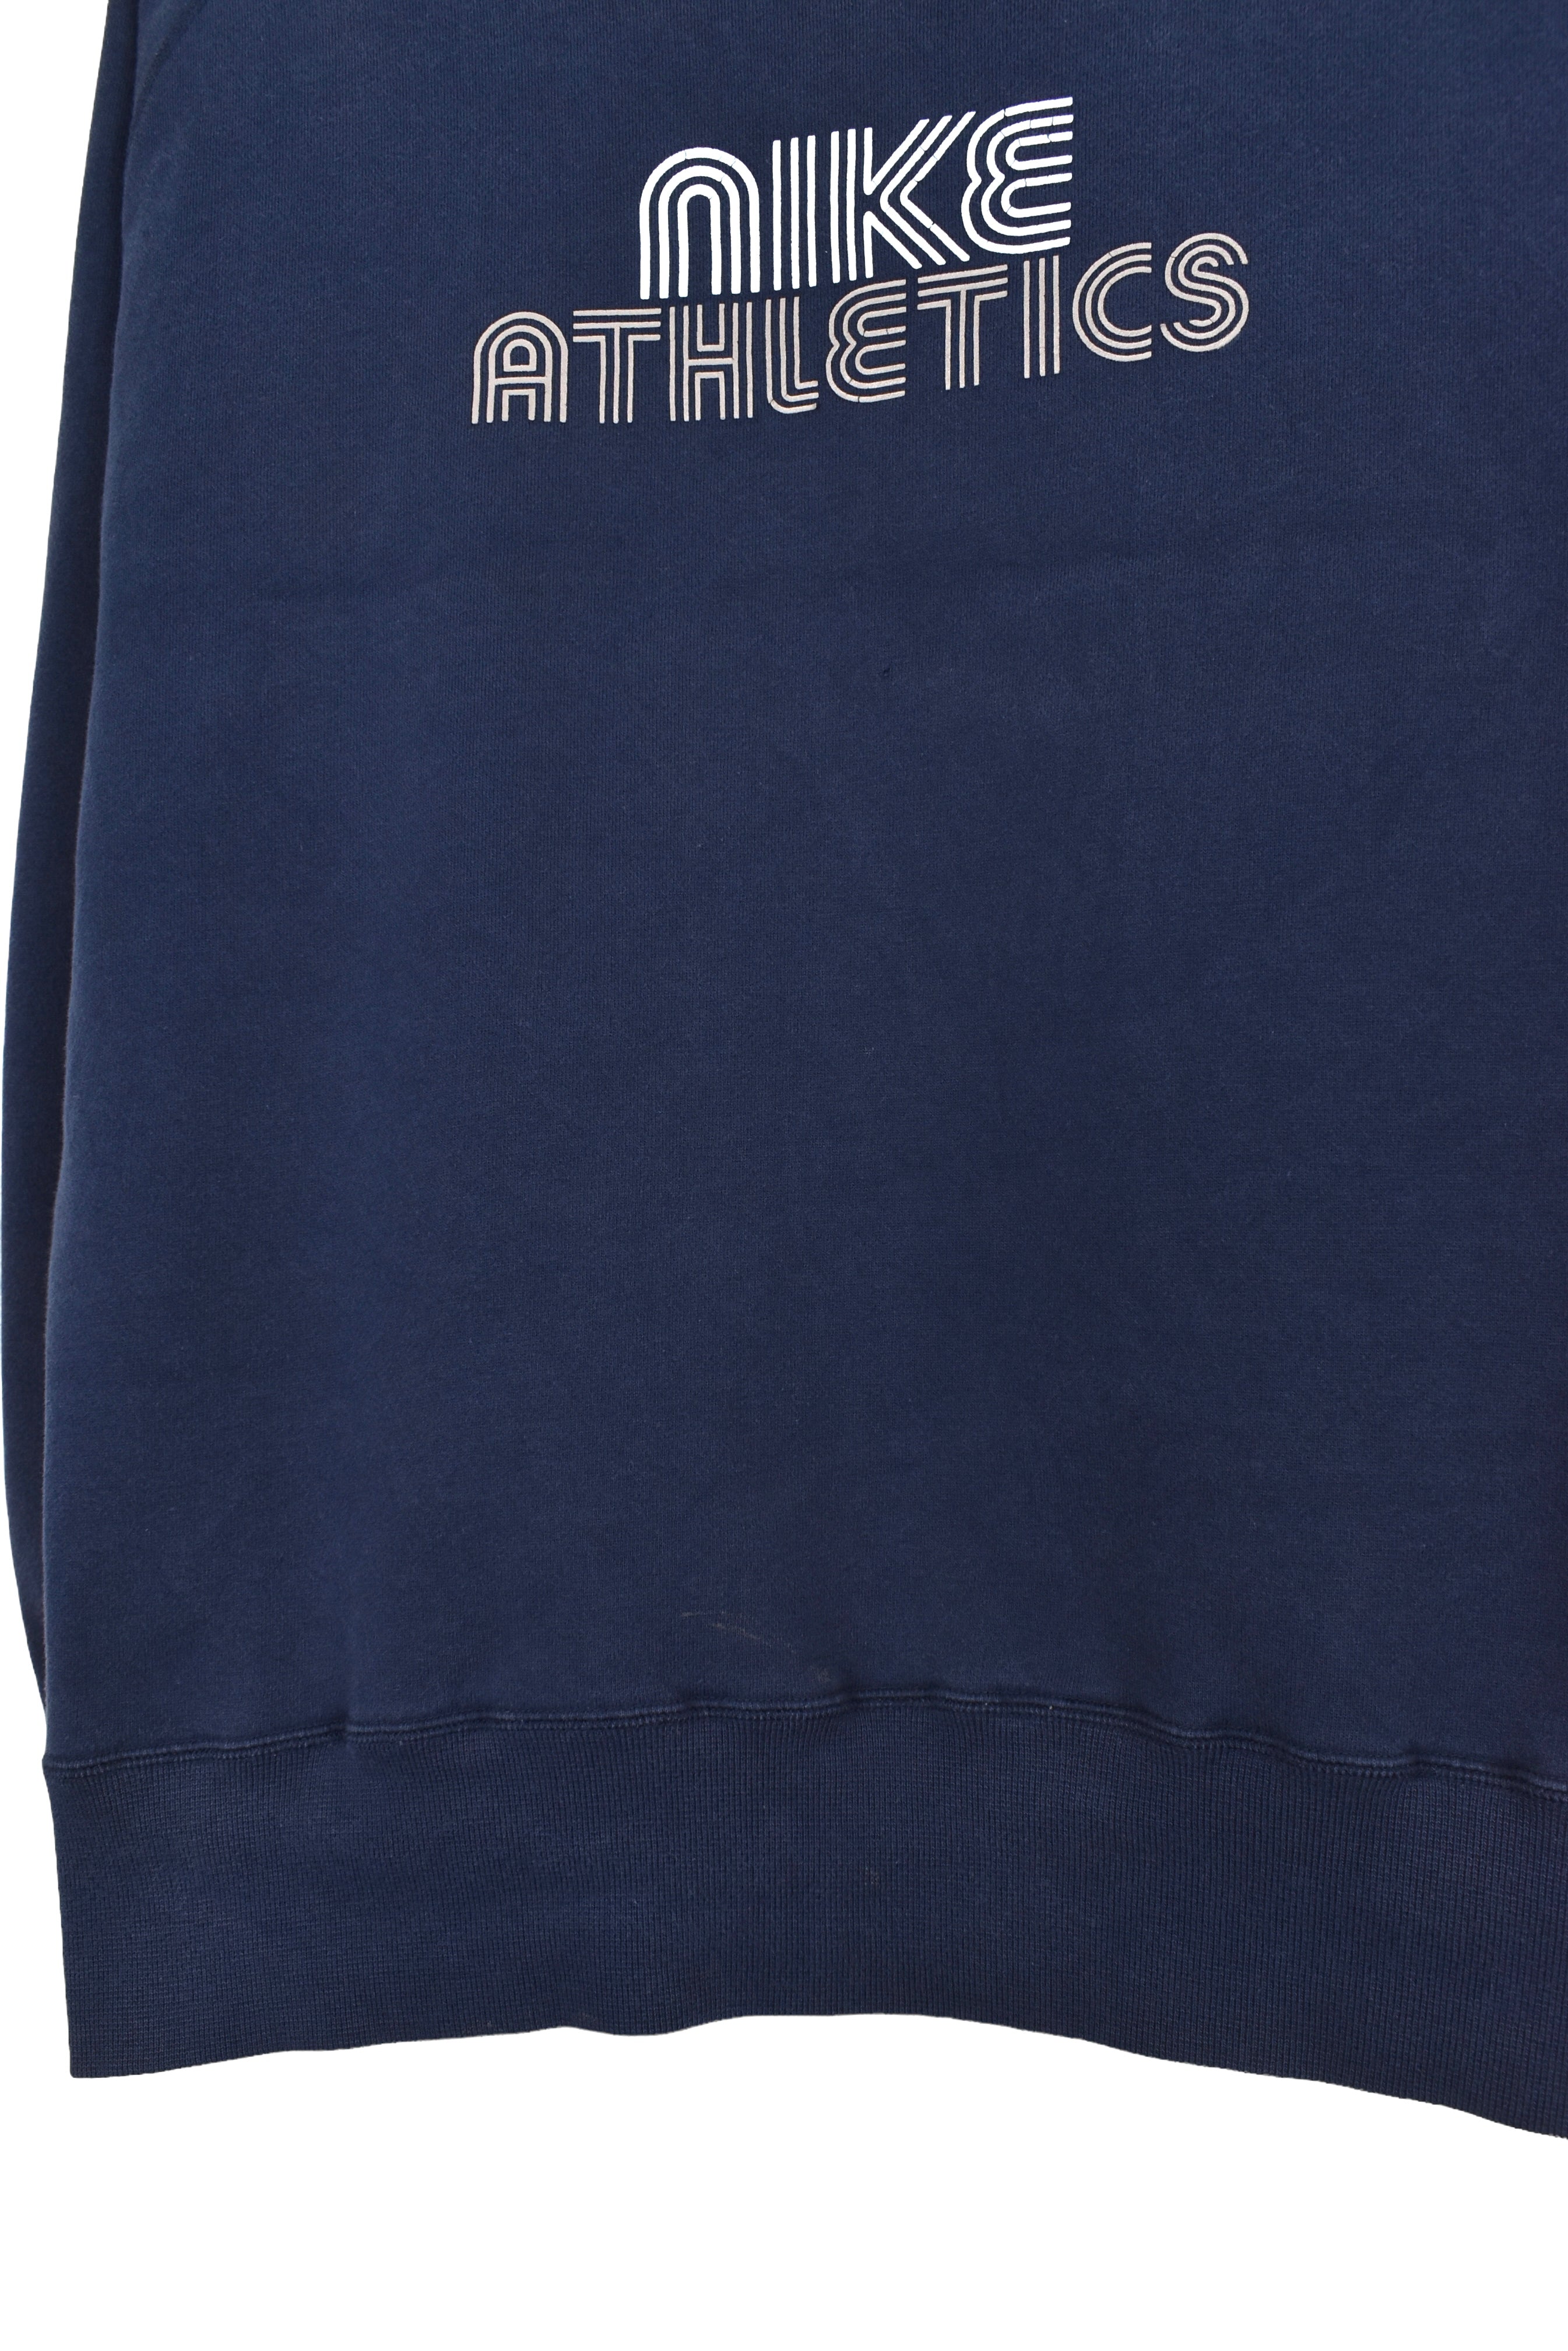 Vintage Nike sweatshirt, navy blue graphic crewneck - M/L